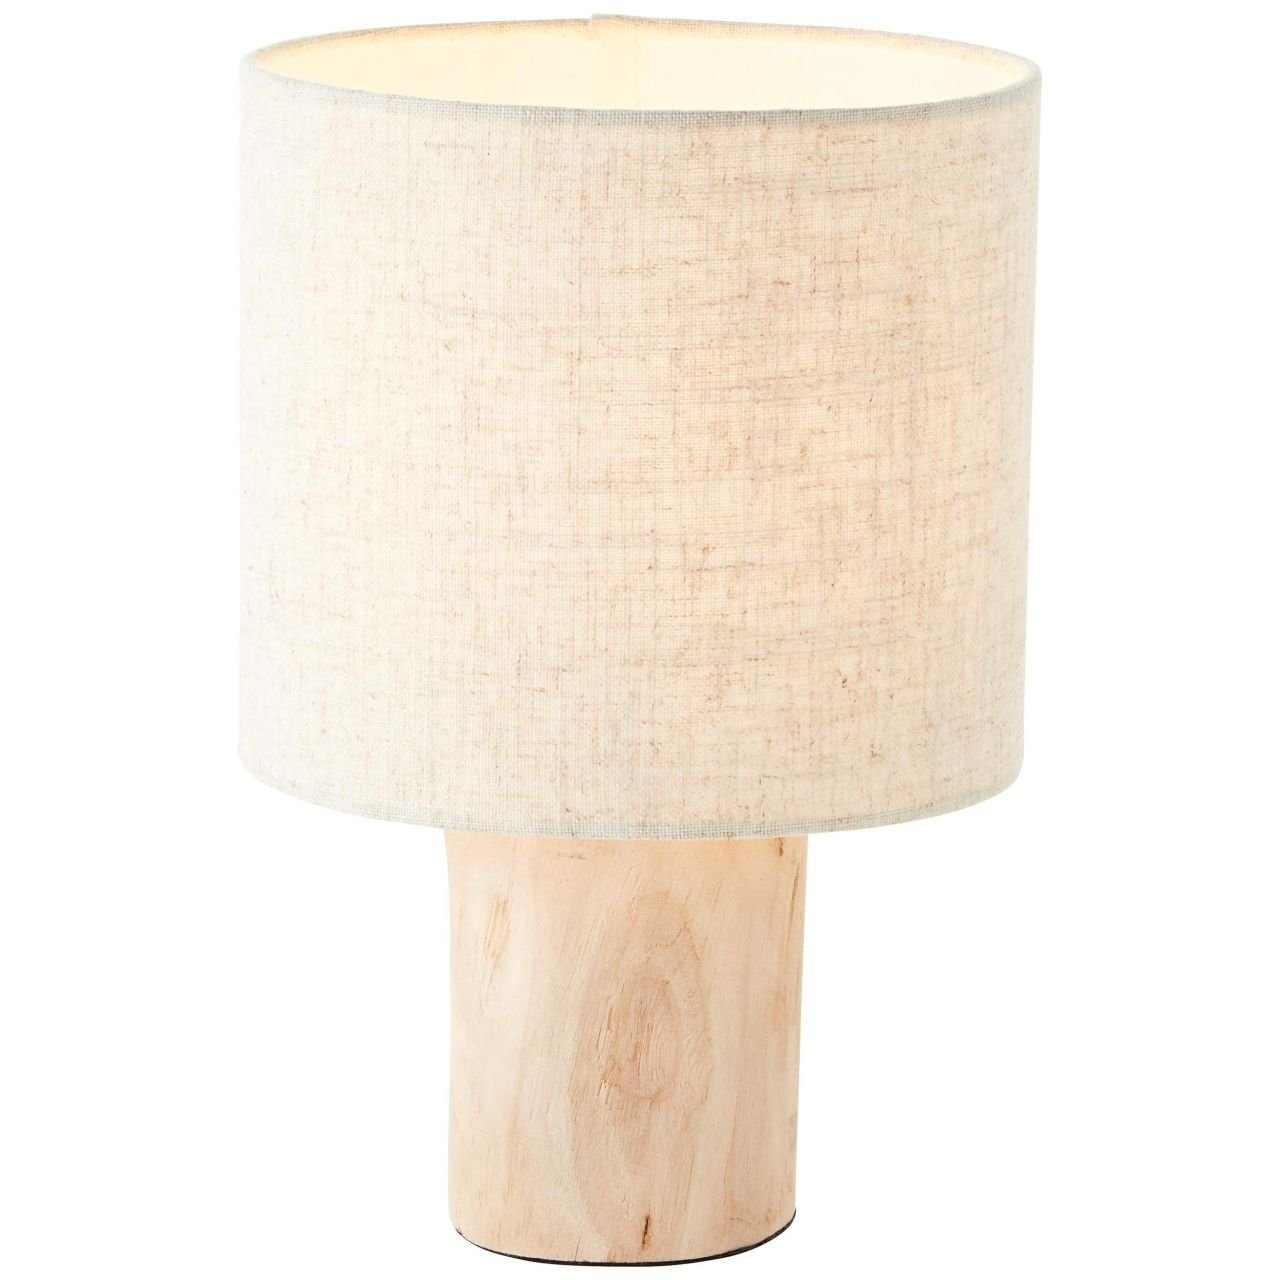 Brilliant Tischleuchte Pia, Lampe, 40W, natur, A60, nachhaltiger Pia E27, 1x Holz Tischleuchte aus